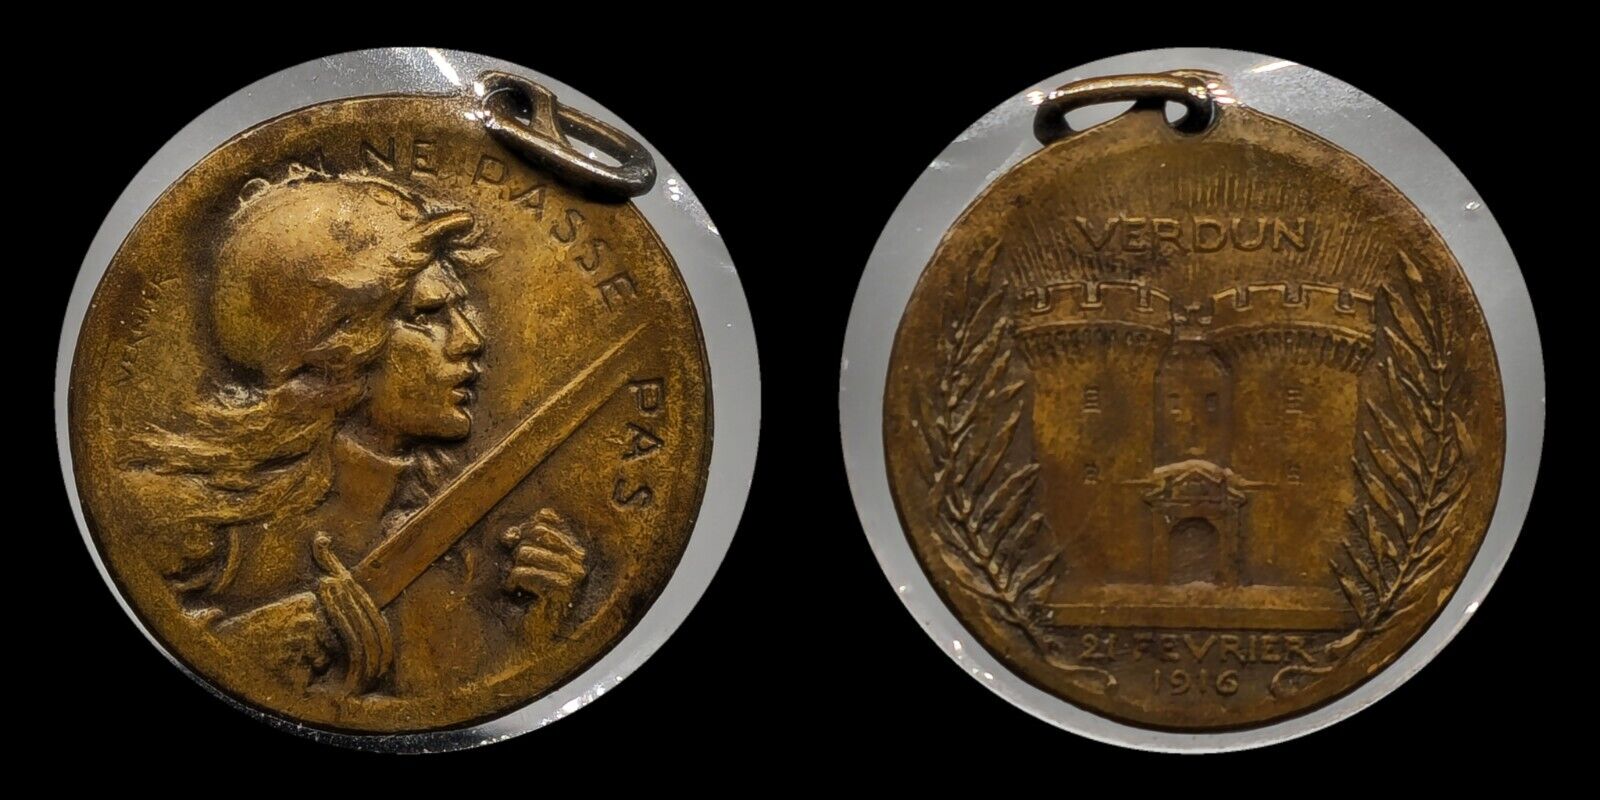 1916 Verdun Medal, Bust of Marianne with sword, Verdun\'s Châtel gate, France